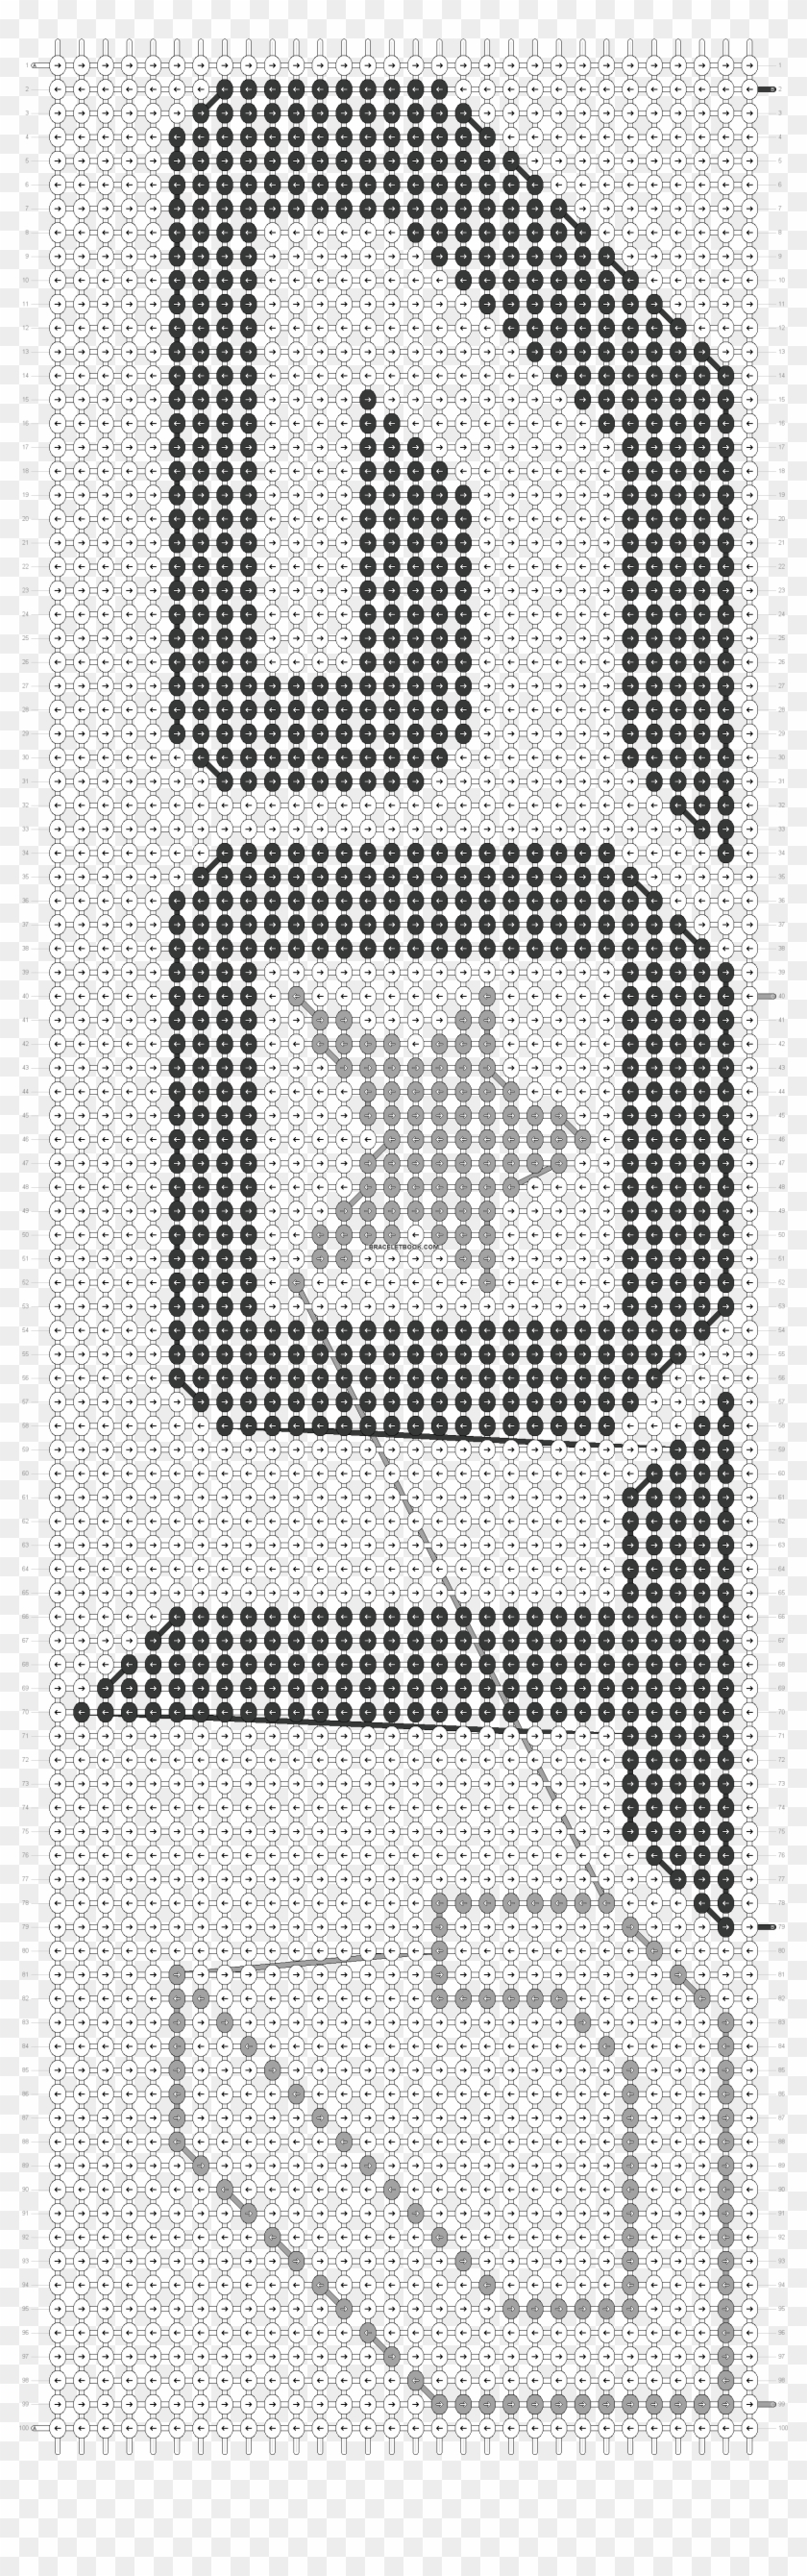 Alpha Pattern - Imagenes Pixeladas De Got7 Clipart #4885771